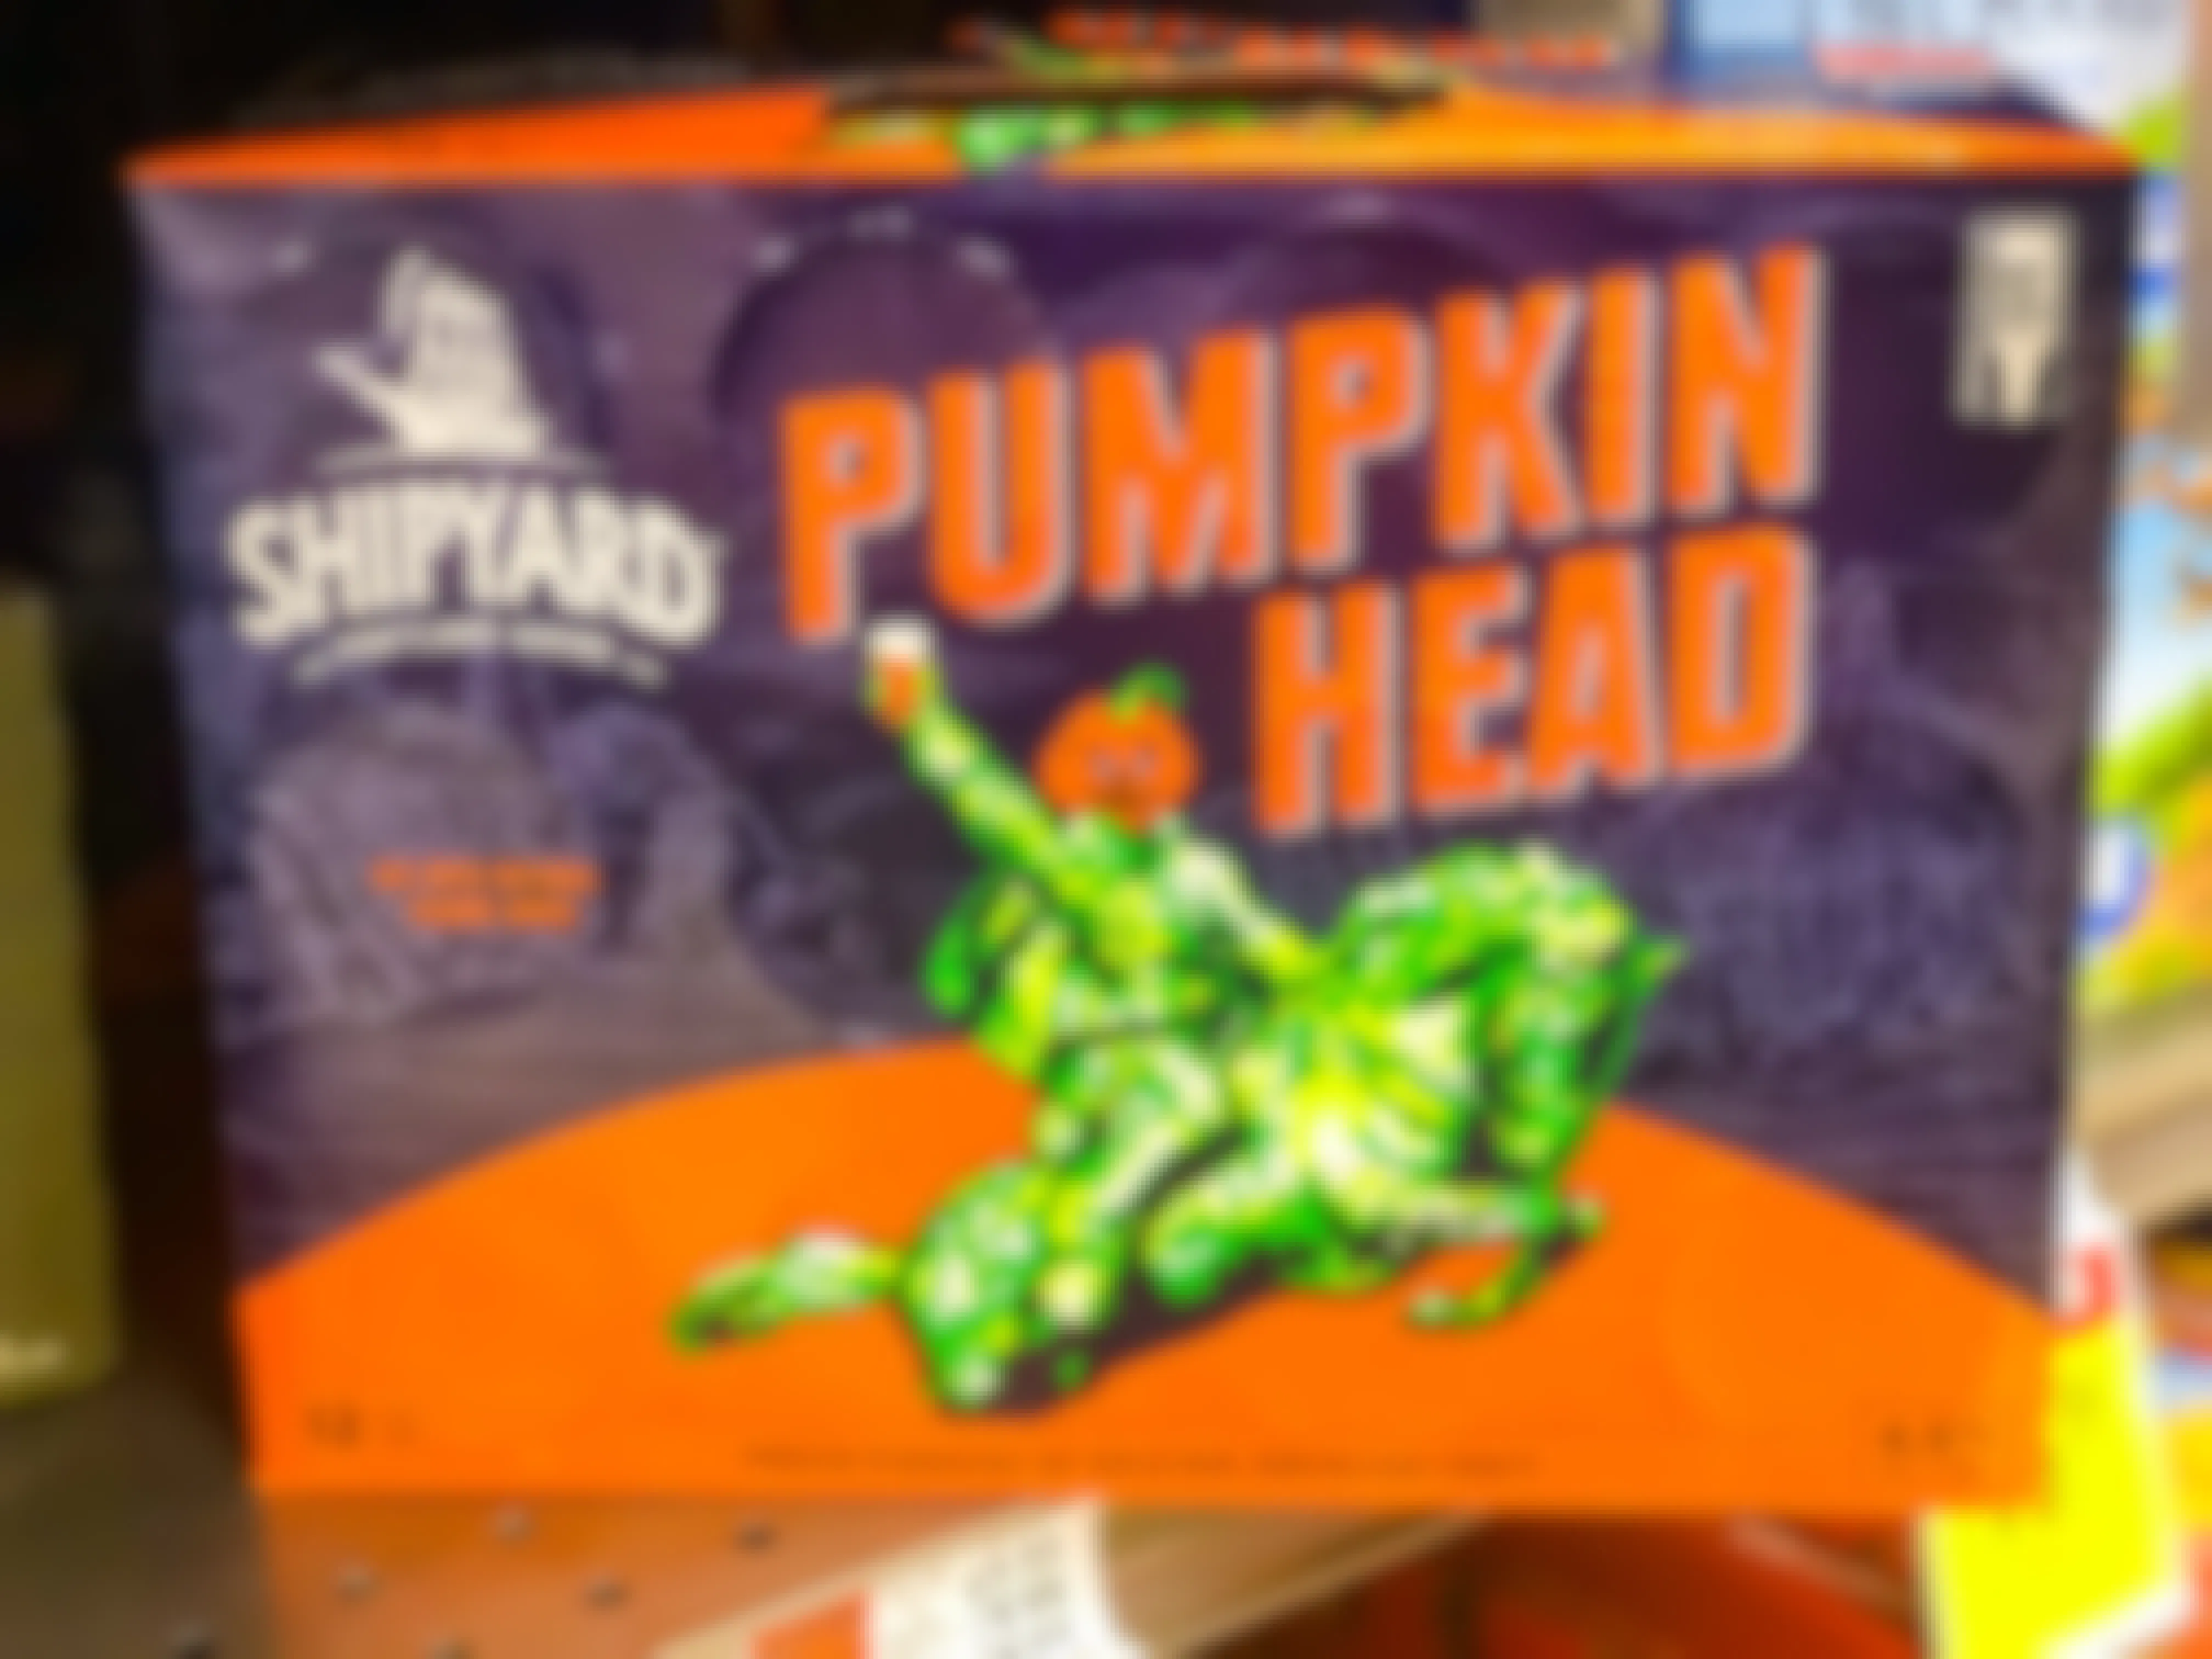 Shipyard pumpkin head beer on shelf